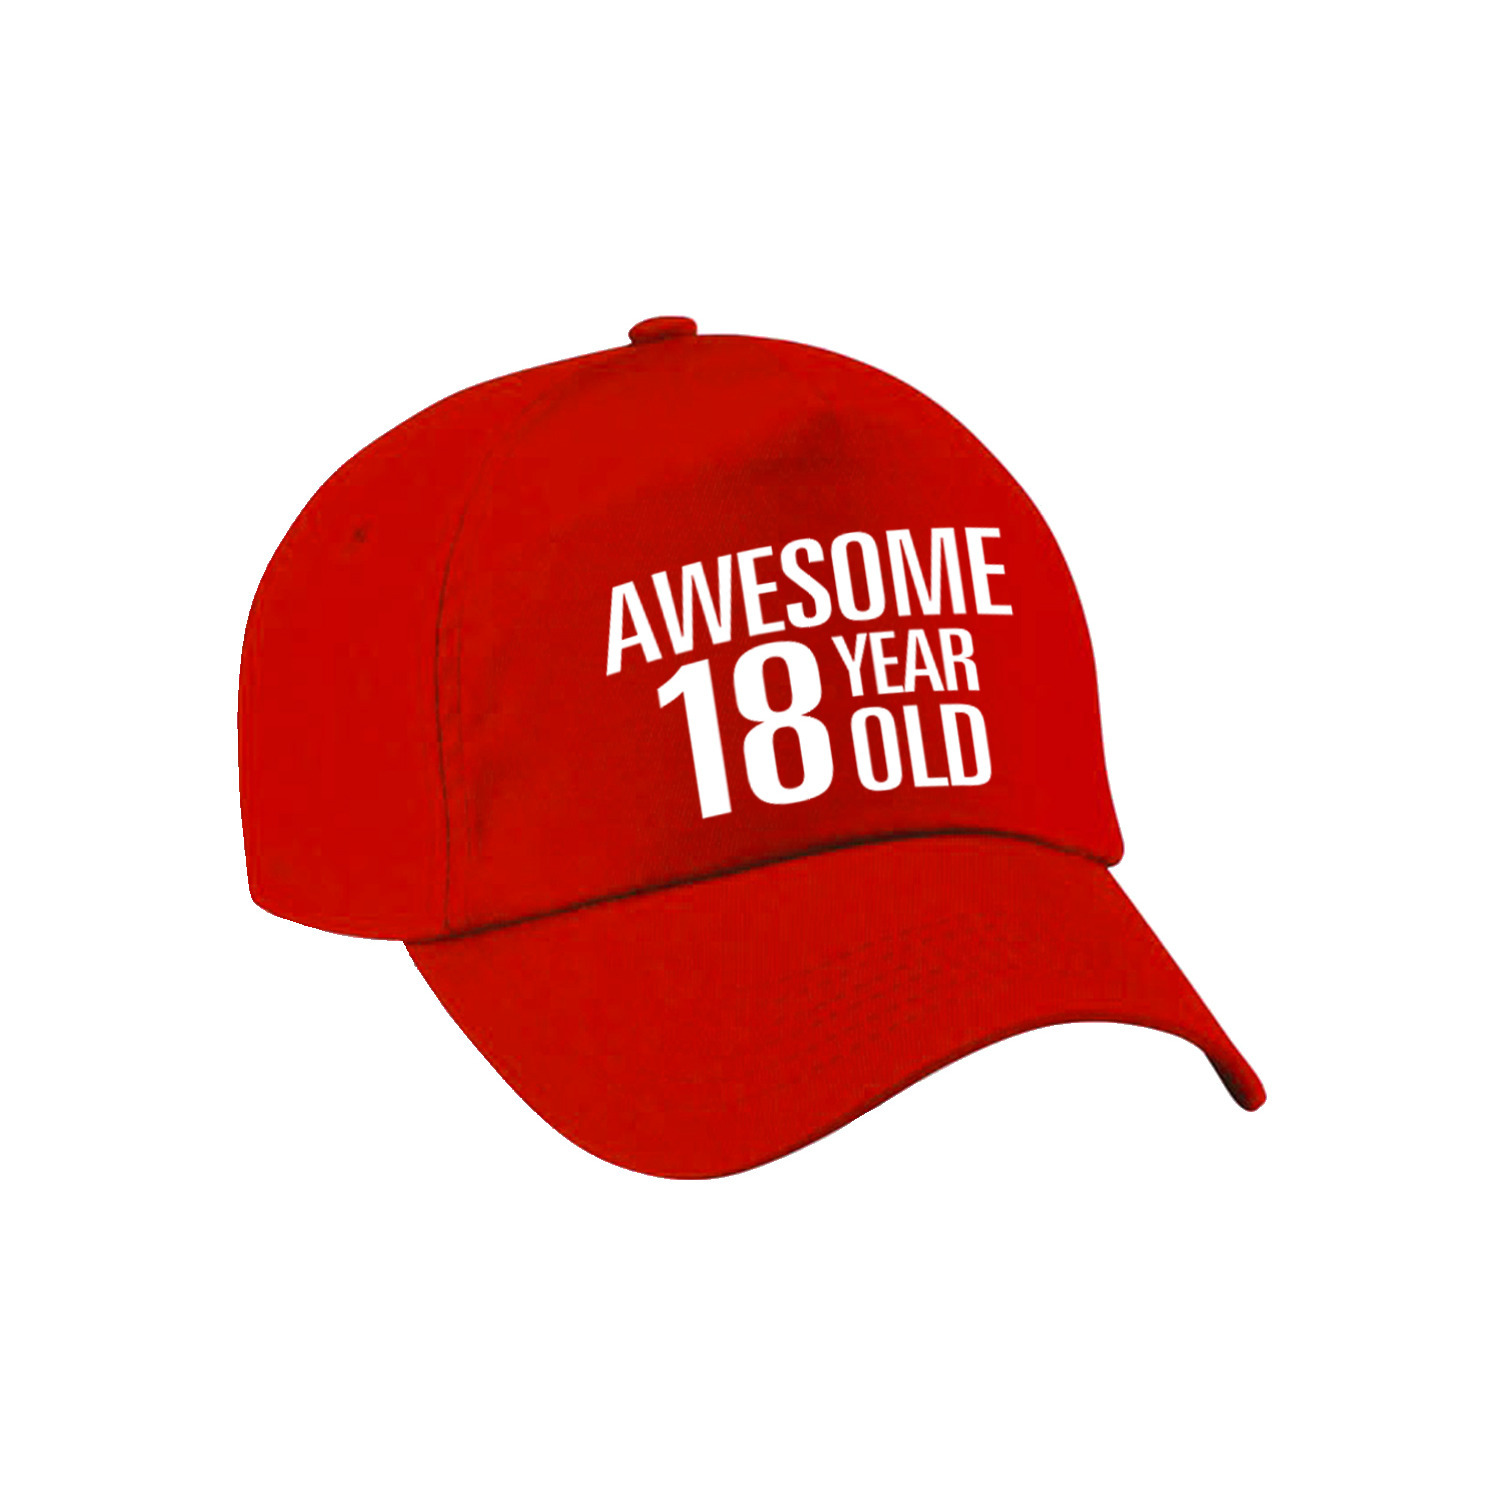 Awesome 18 year old verjaardag pet-cap rood voor dames en heren